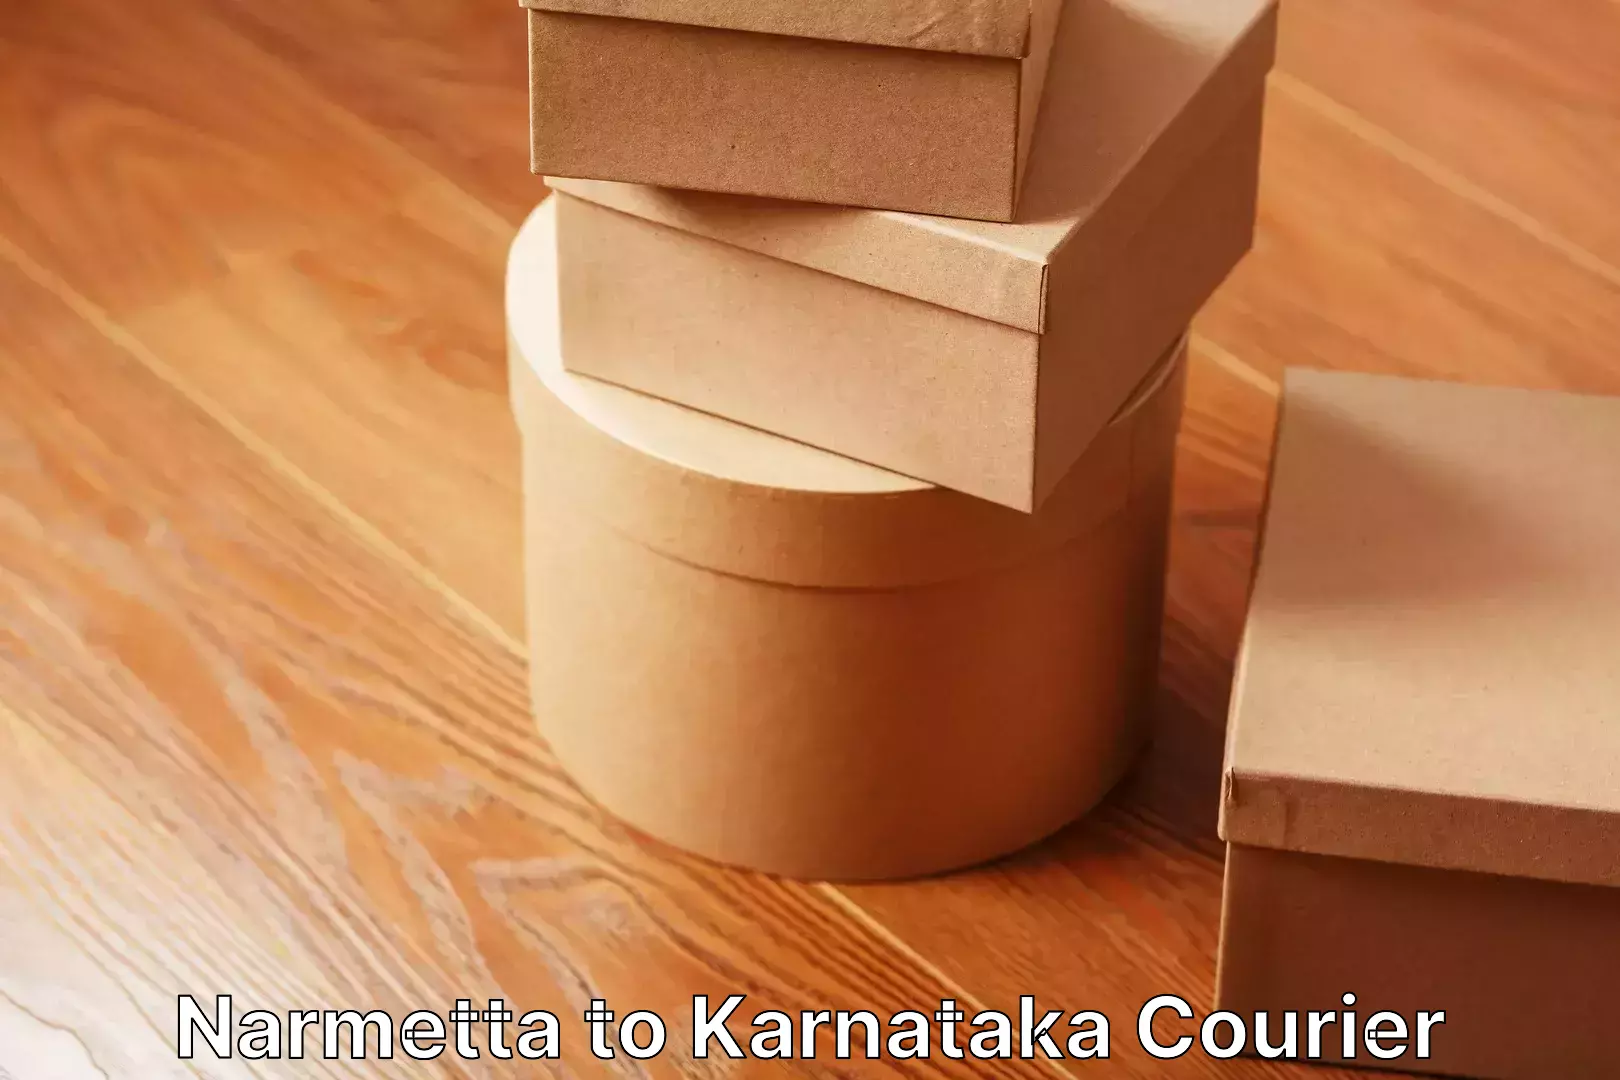 Moving and packing experts Narmetta to Karnataka